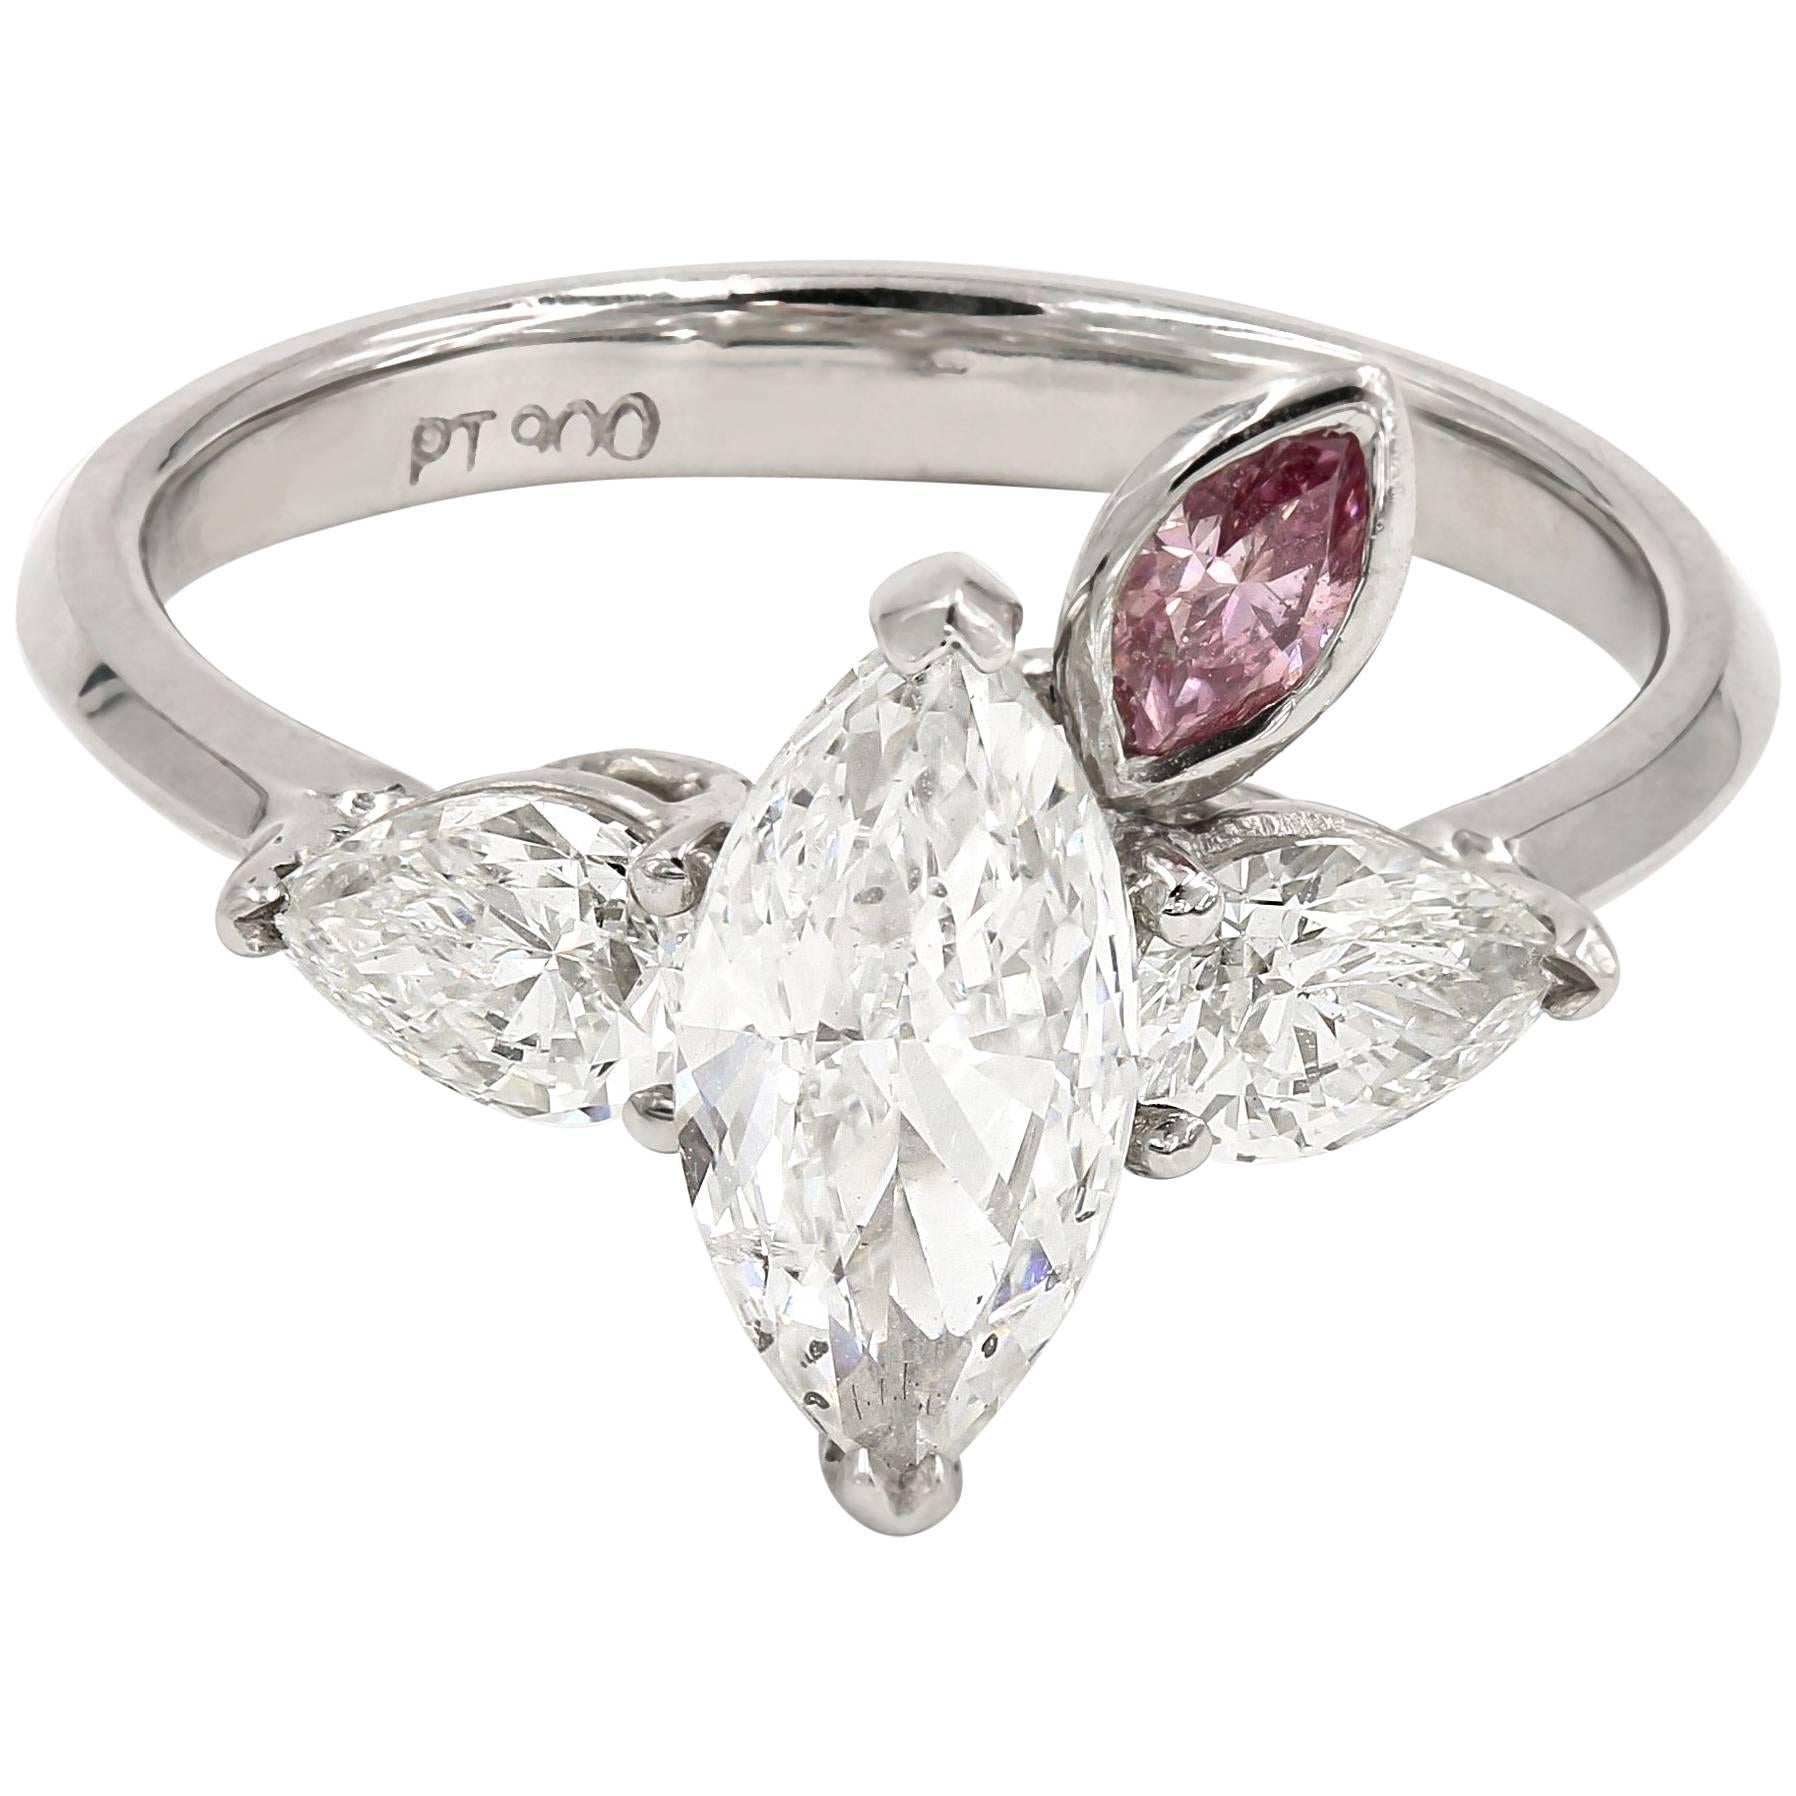 GIA Certified 1.01 Marquise Diamond Ring with Fancy Intense Purplish-Pink Dia